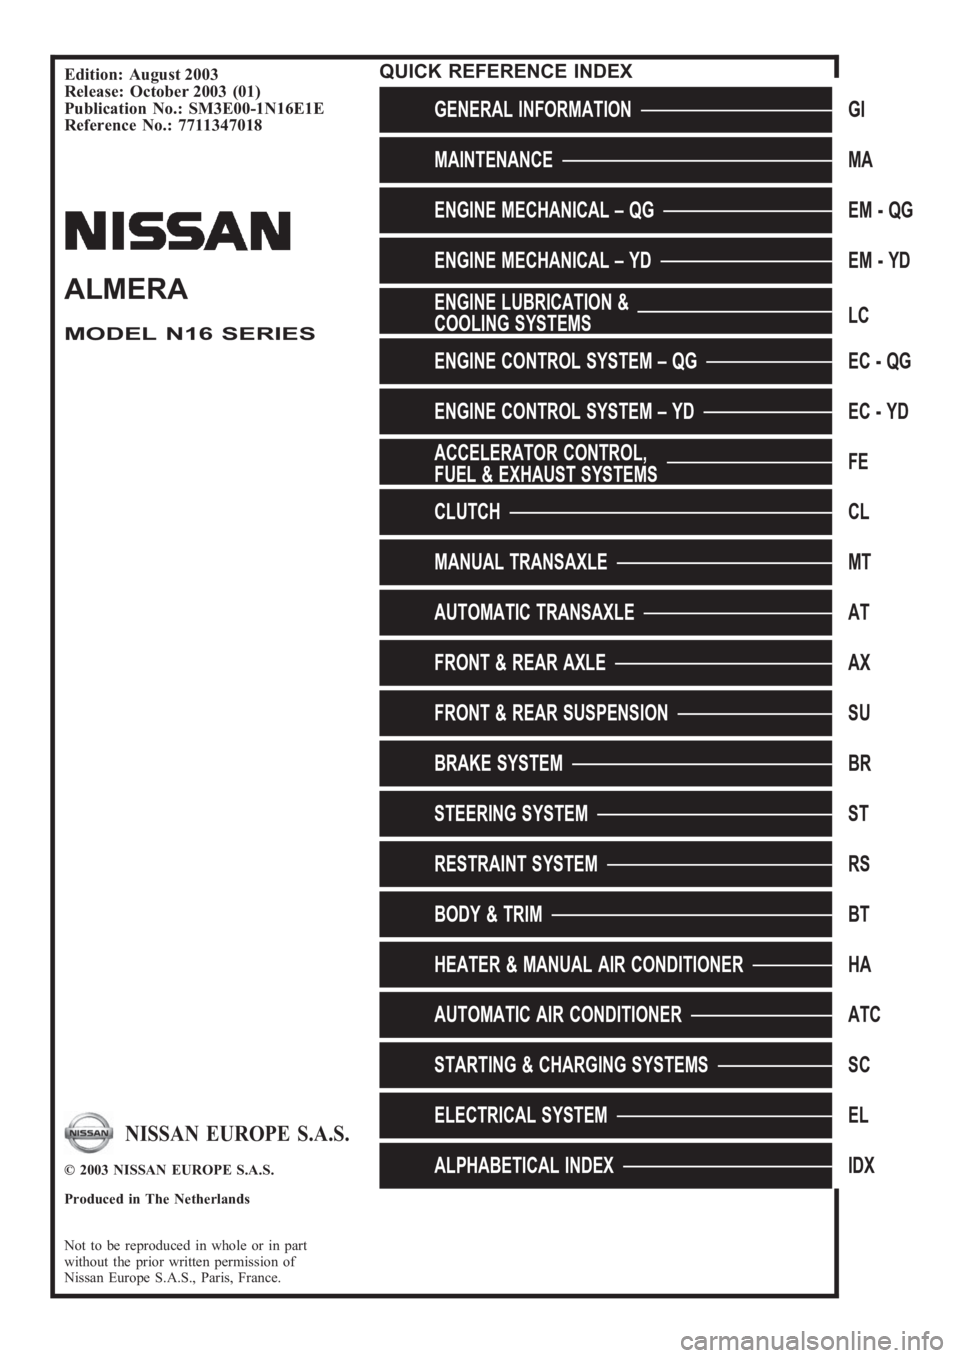 NISSAN ALMERA N16 2003  Electronic Repair Manual Edition: August 2003
Release: October 2003 (01)
Publication No.: SM3E00-1N16E1E
Reference No.: 7711347018
GENERAL INFORMATIONGI
MAINTENANCEMA
ENGINE MECHANICAL – QGEM-QG
ENGINE MECHANICAL – YDEM-Y